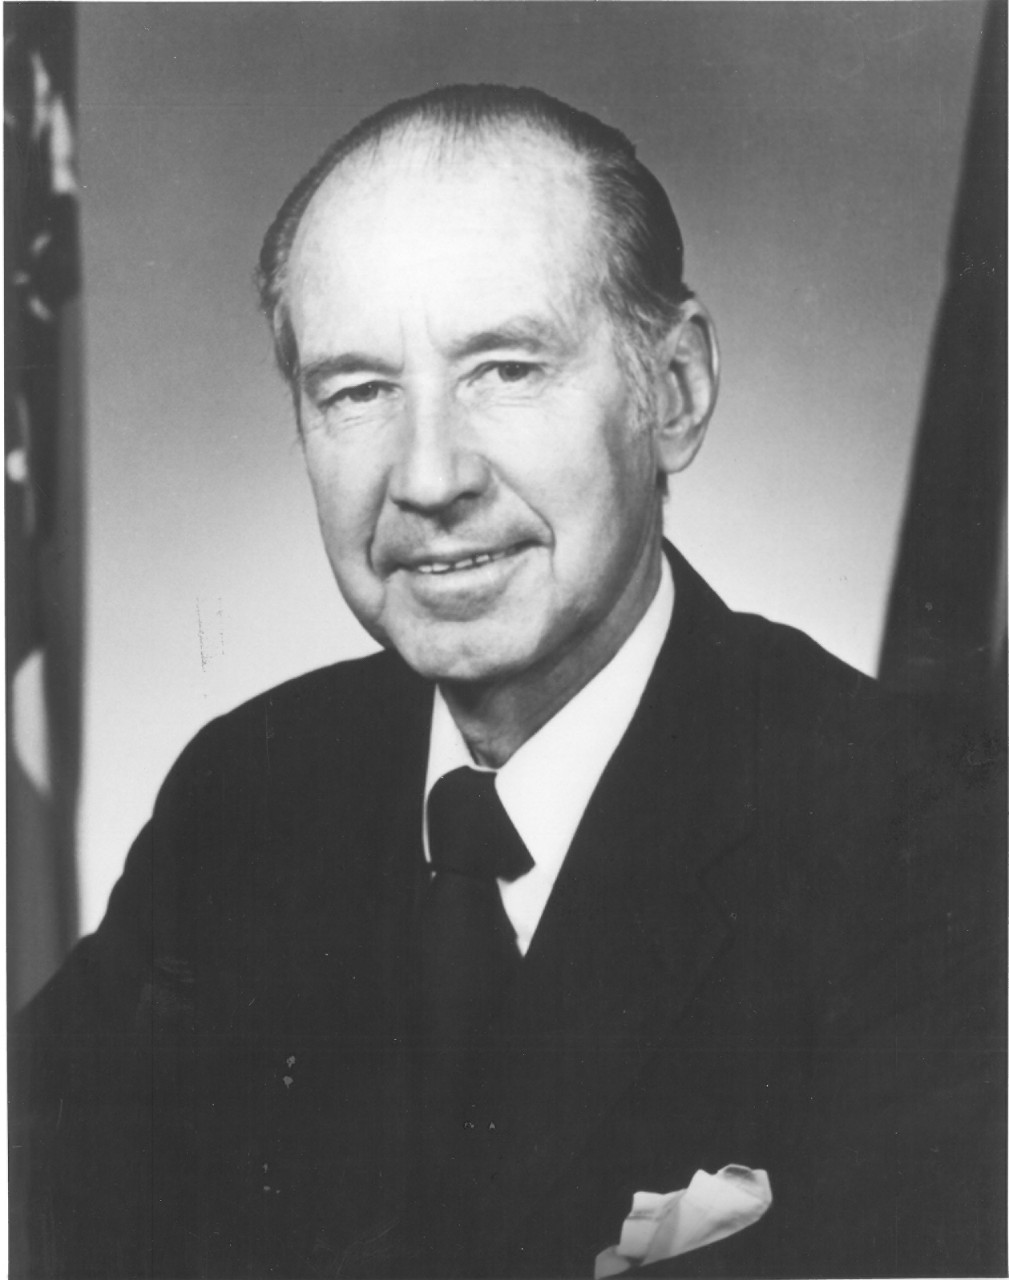 Secretary of the Navy William Graham Claytor, Jr.